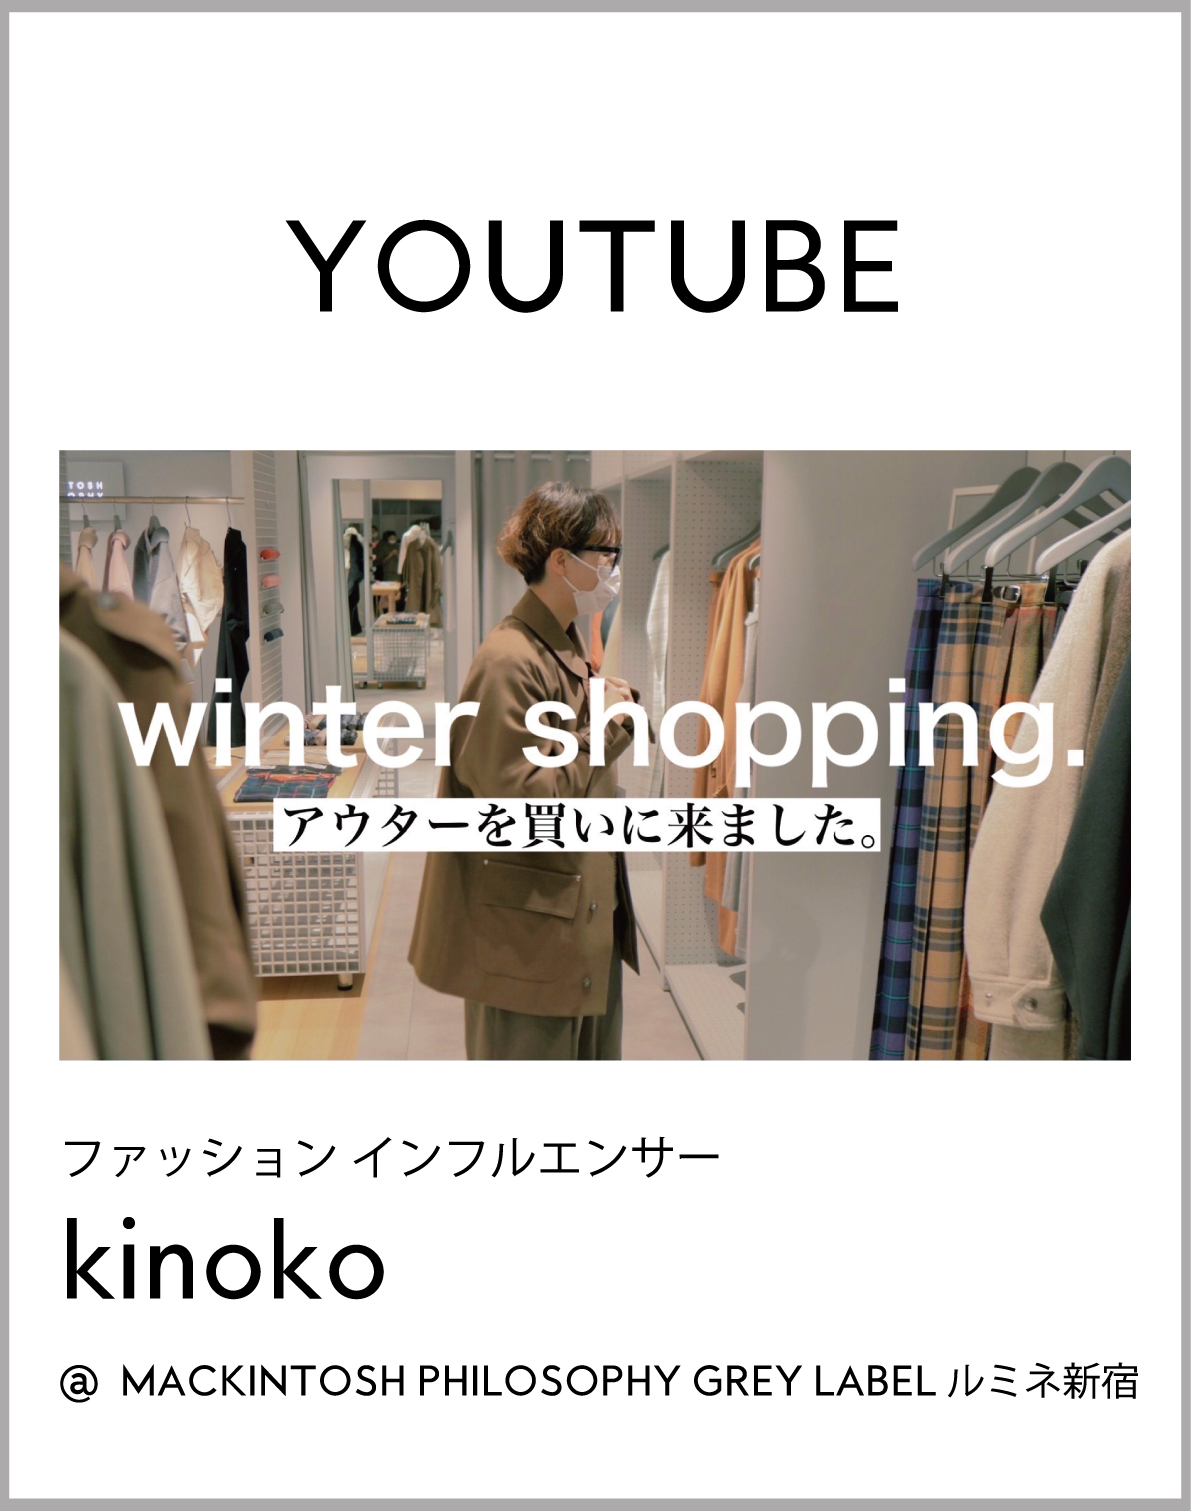 【GREY LABEL】 kinokoさん YouTube第2弾 @MACKINTOSH PHILOSOPHY GREY LABEL ルミネ新宿店